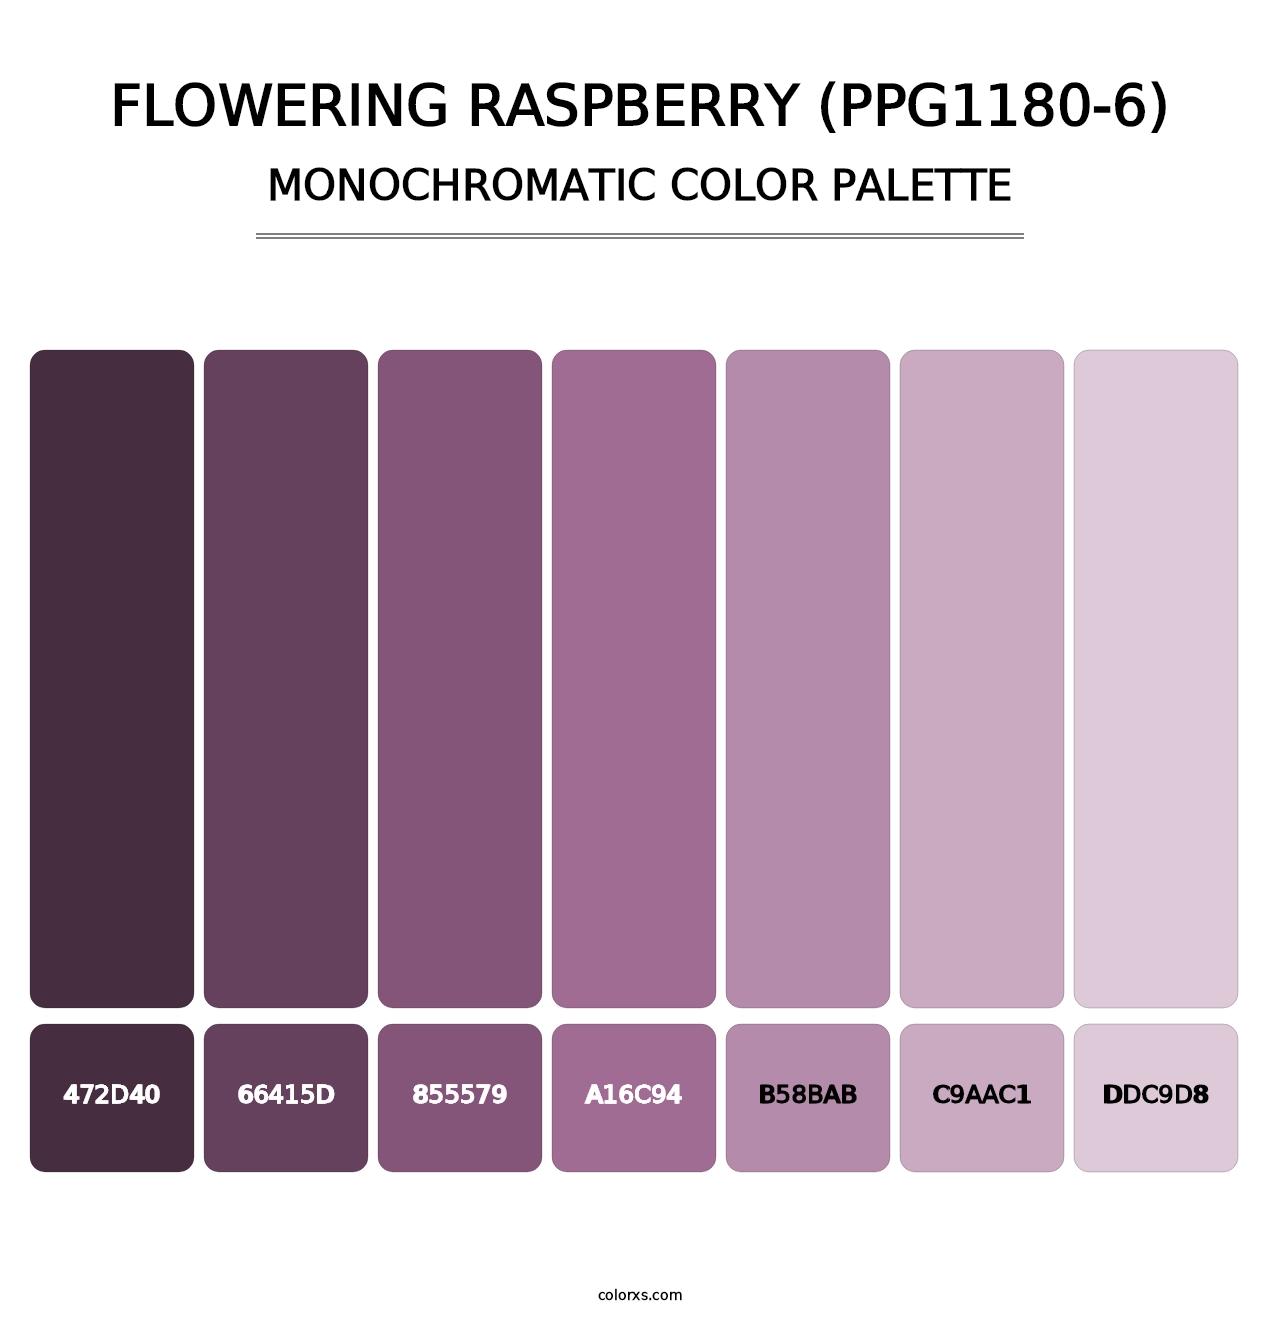 Flowering Raspberry (PPG1180-6) - Monochromatic Color Palette